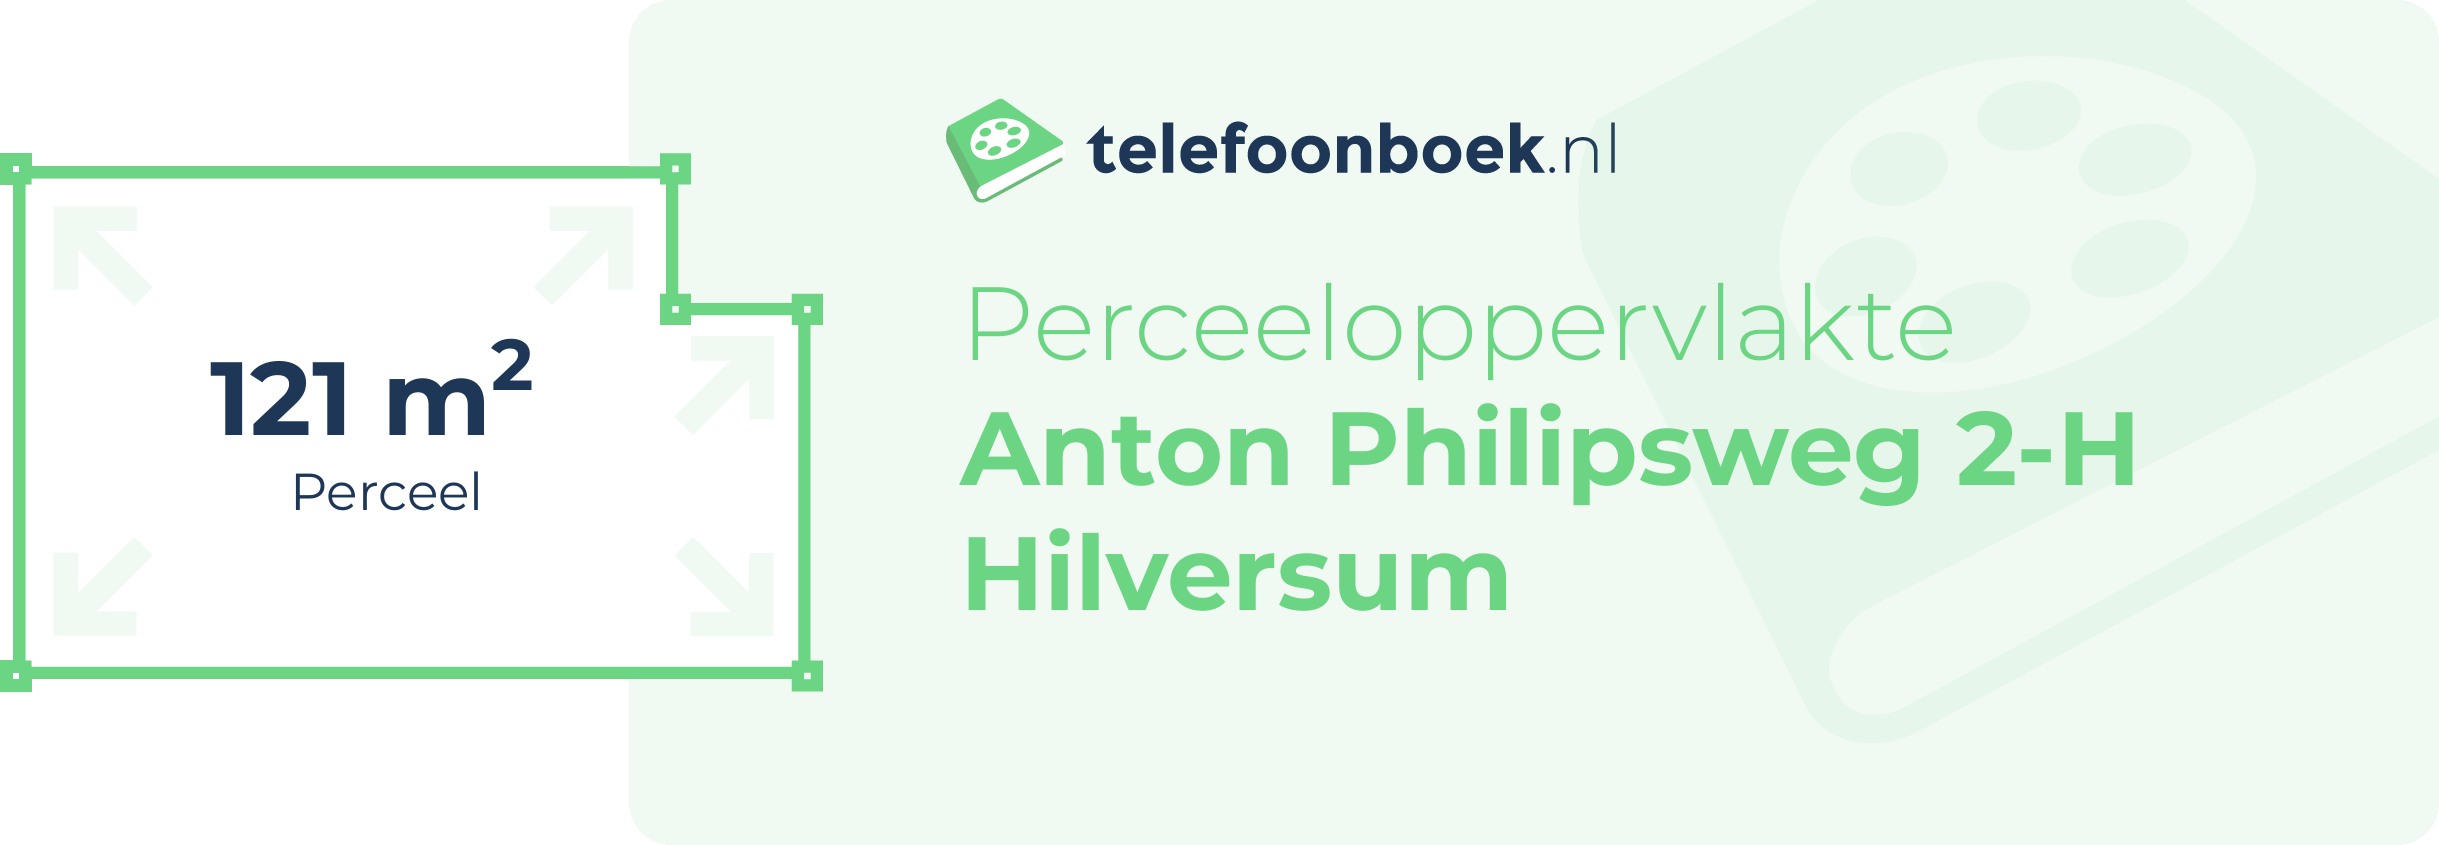 Perceeloppervlakte Anton Philipsweg 2-H Hilversum